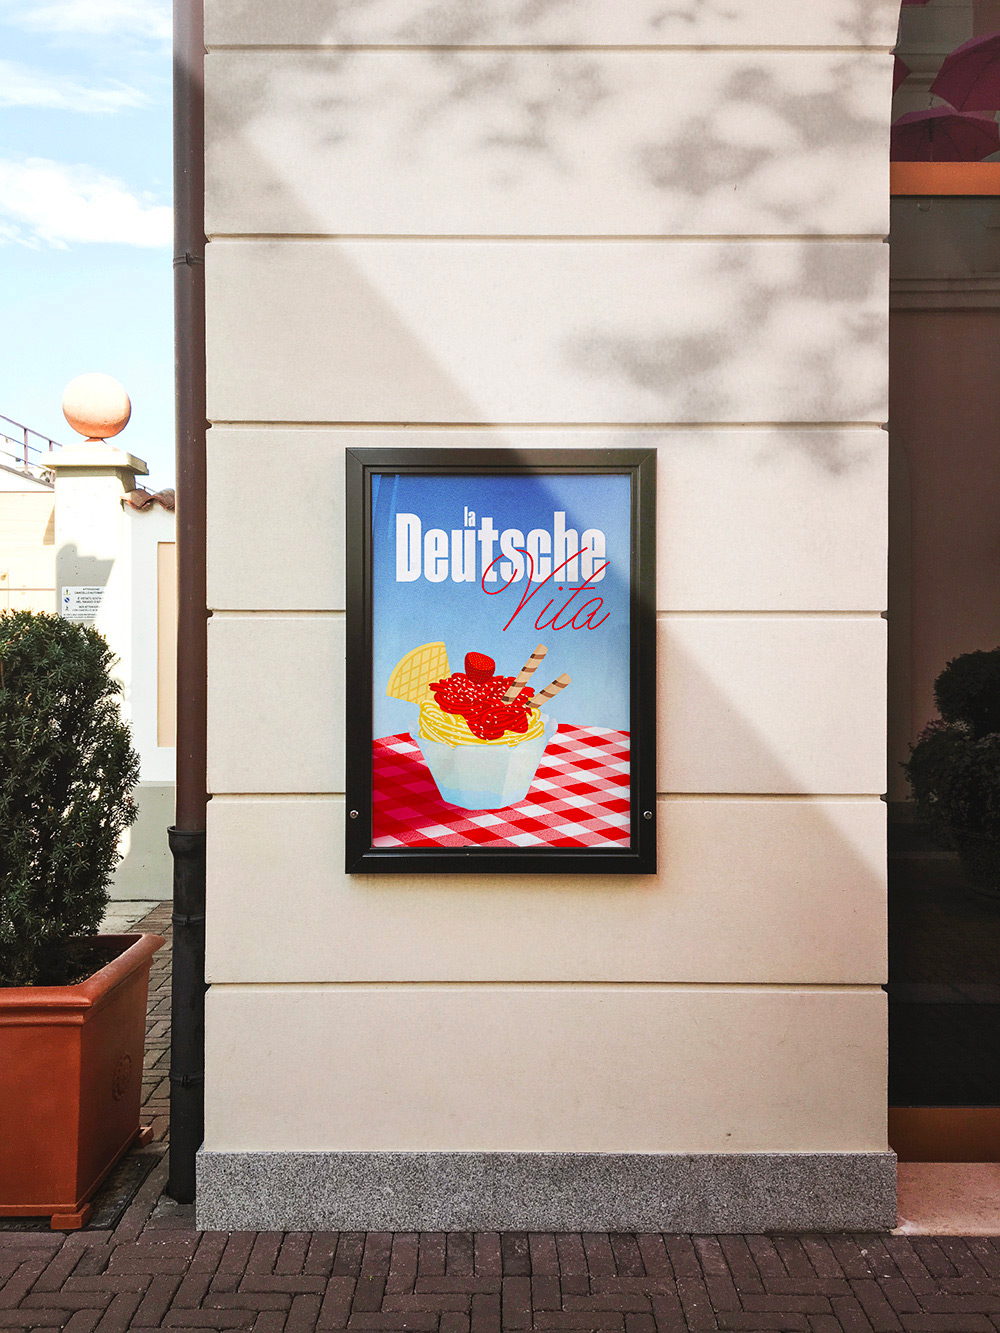 La Deutsche Vita, mockup, poster, print, illustration